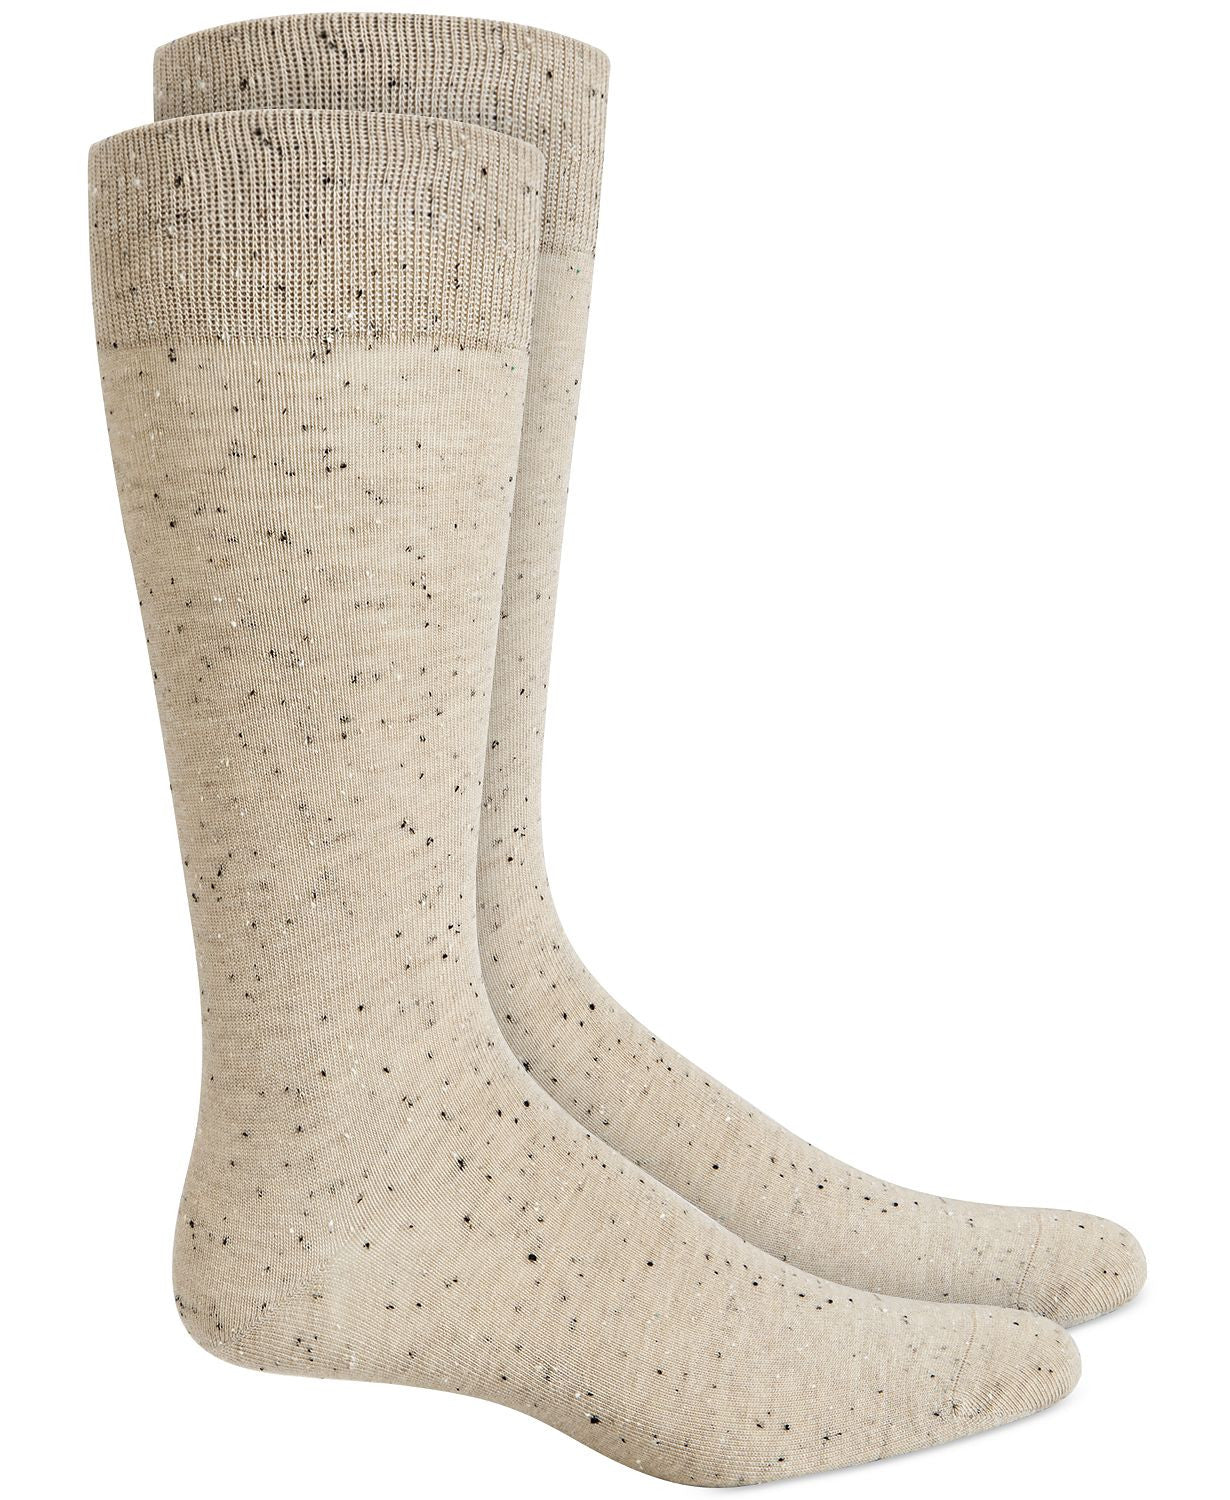 Alfani Speckled Socks Tan